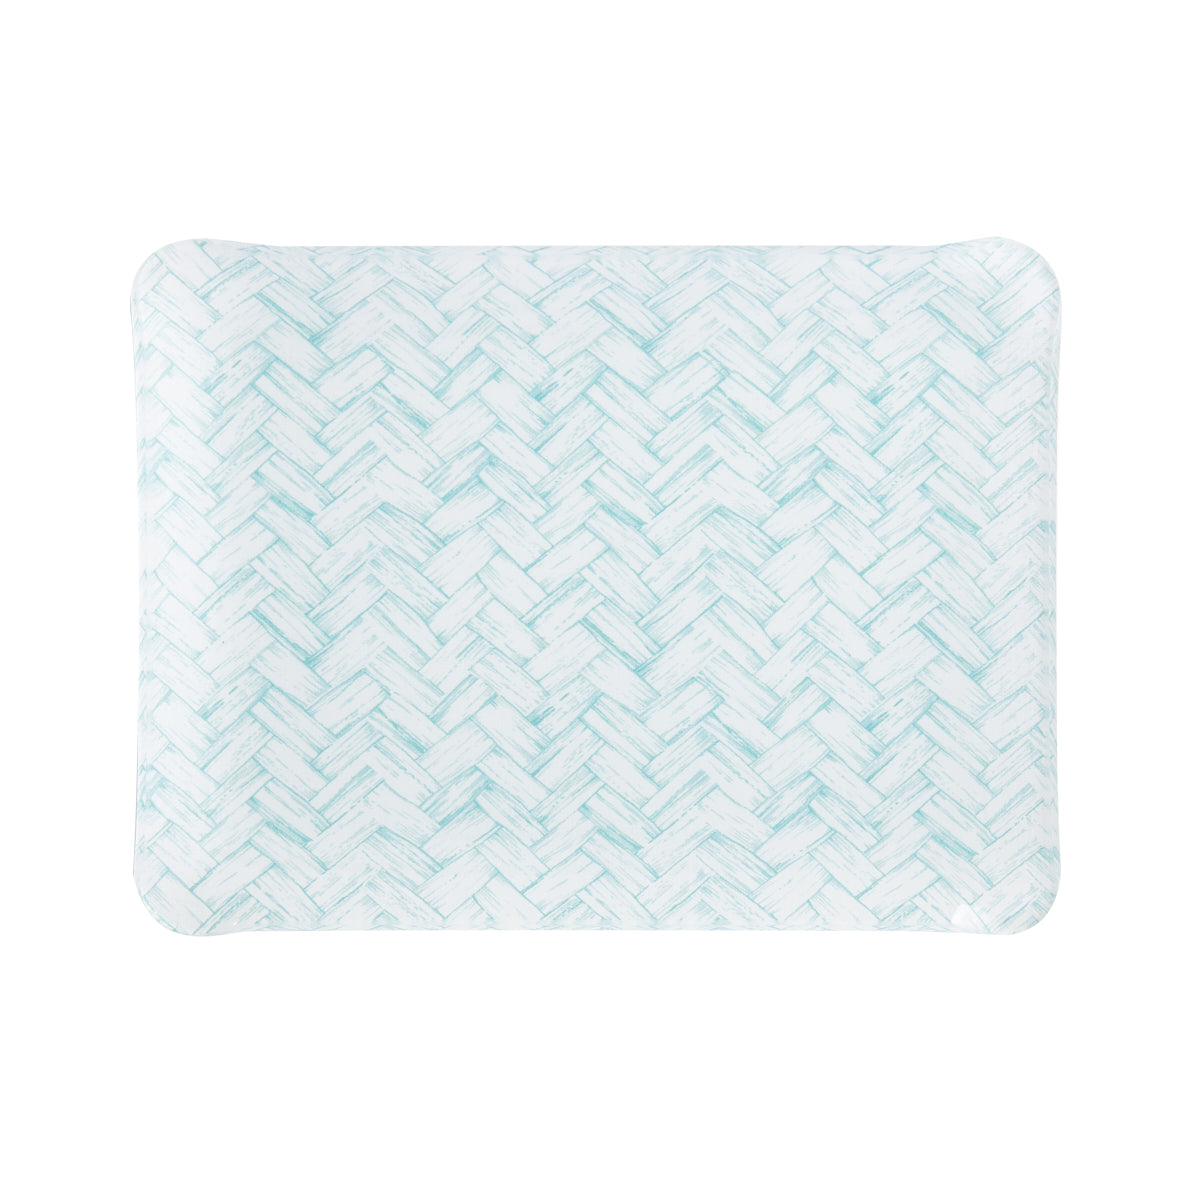 Fabric Tray Small 24X18- Aqua Basketweave